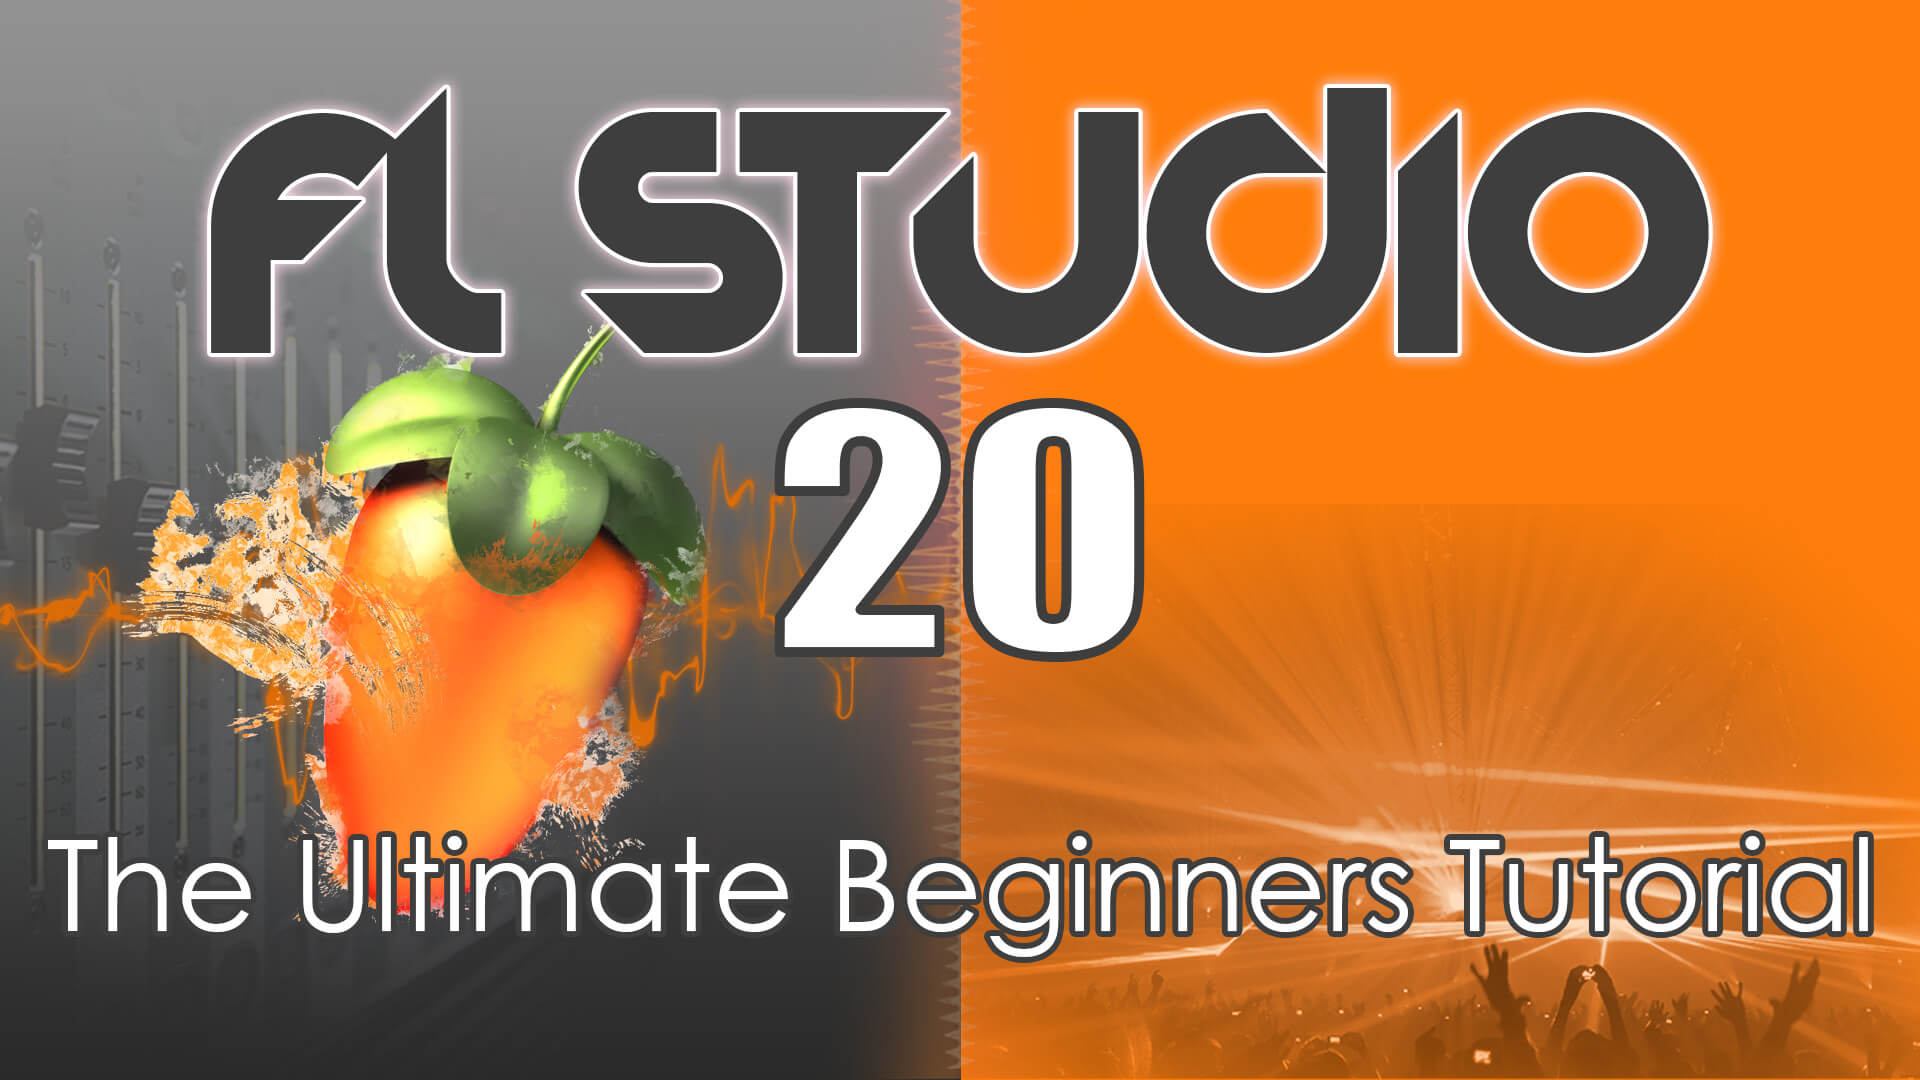 FL Studio Tutorial 2021: The Complete Beginner's Guide to FL